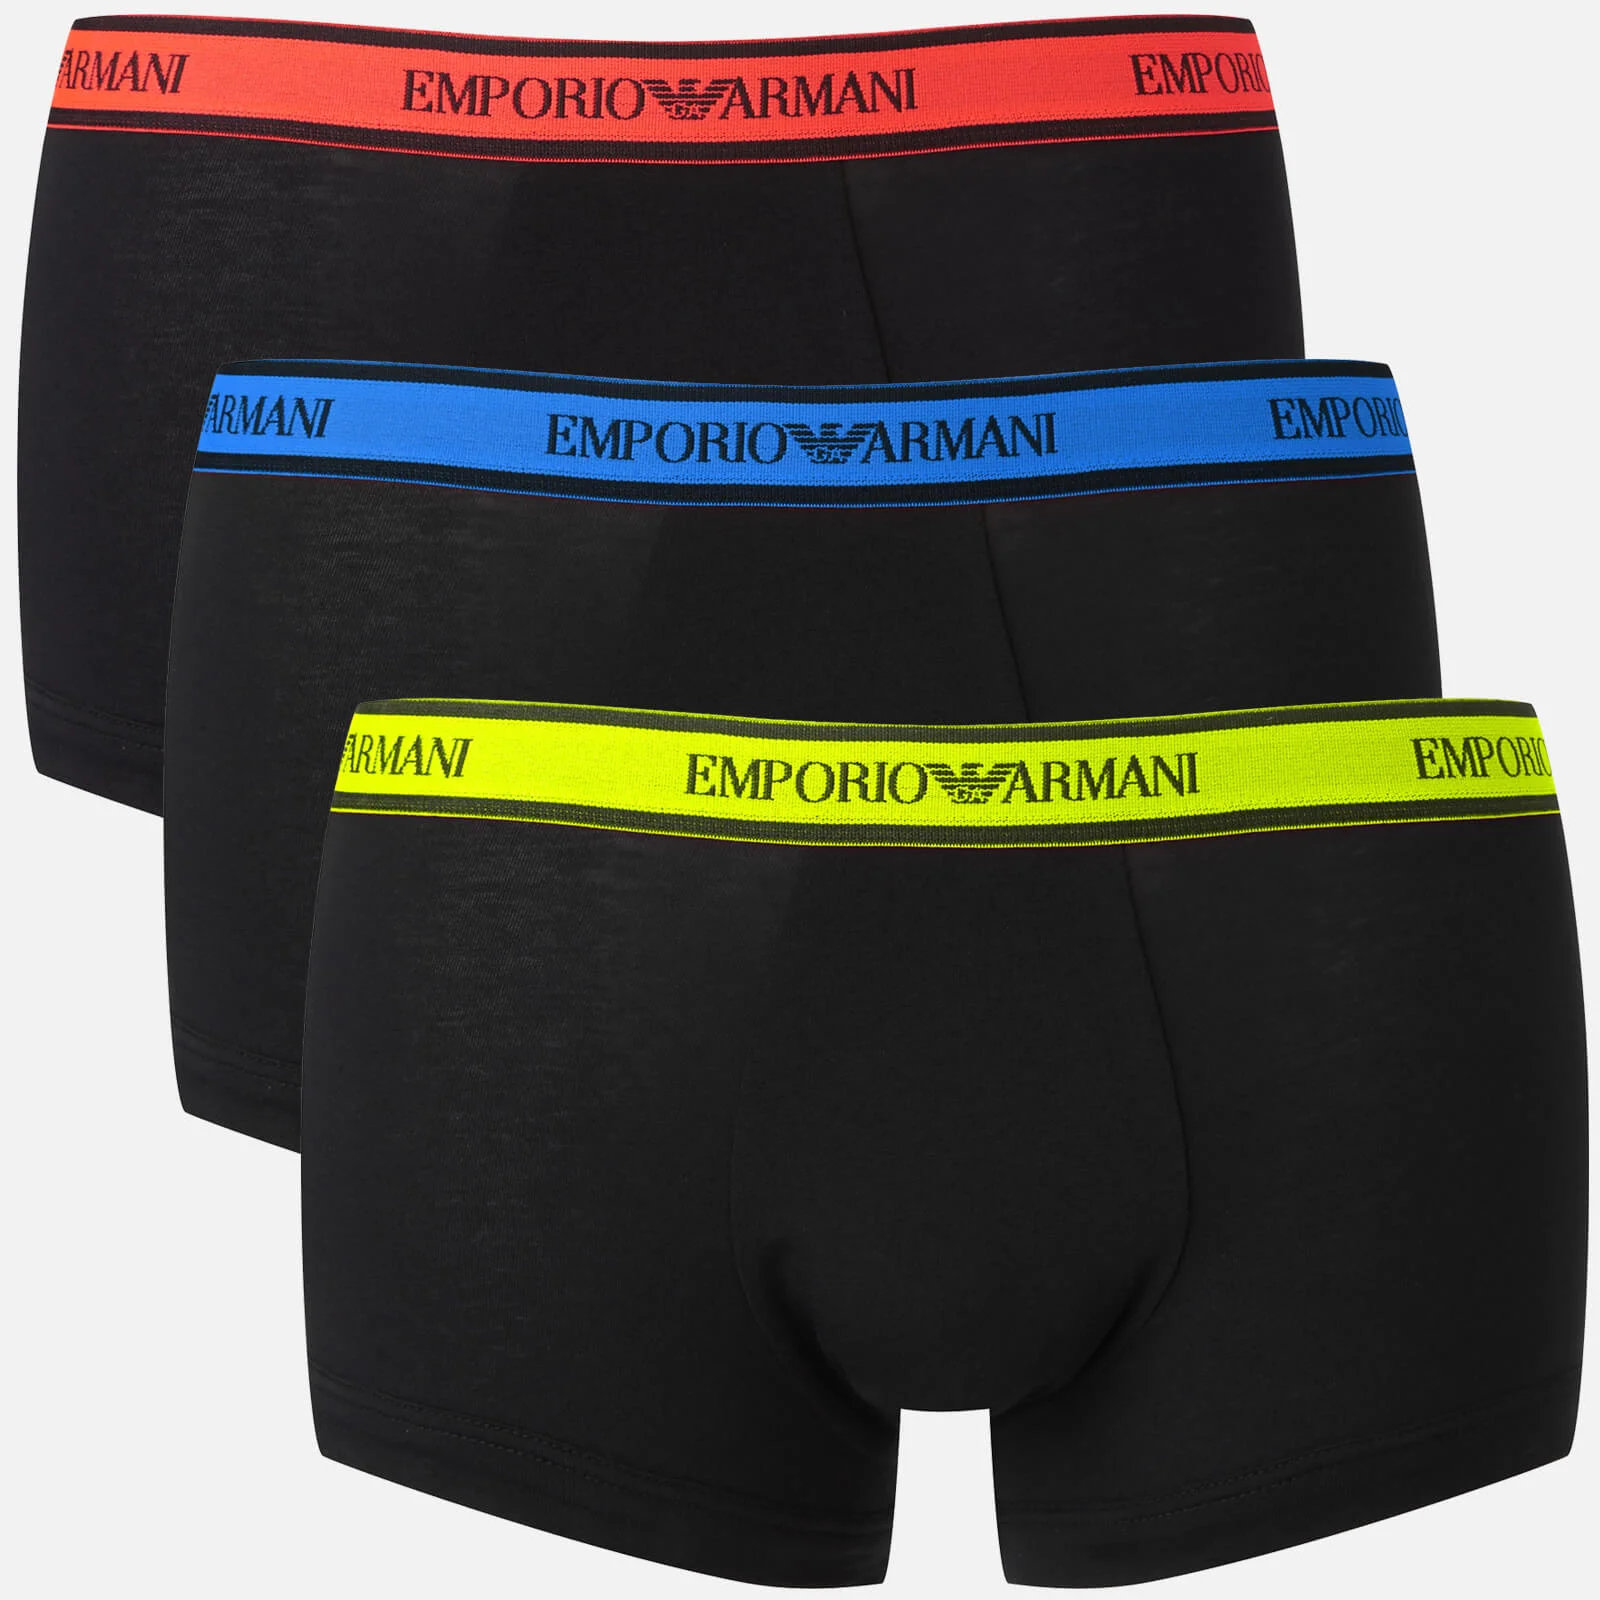 Emporio Armani Men's 3 Pack Boxer Shorts - Black Image 1